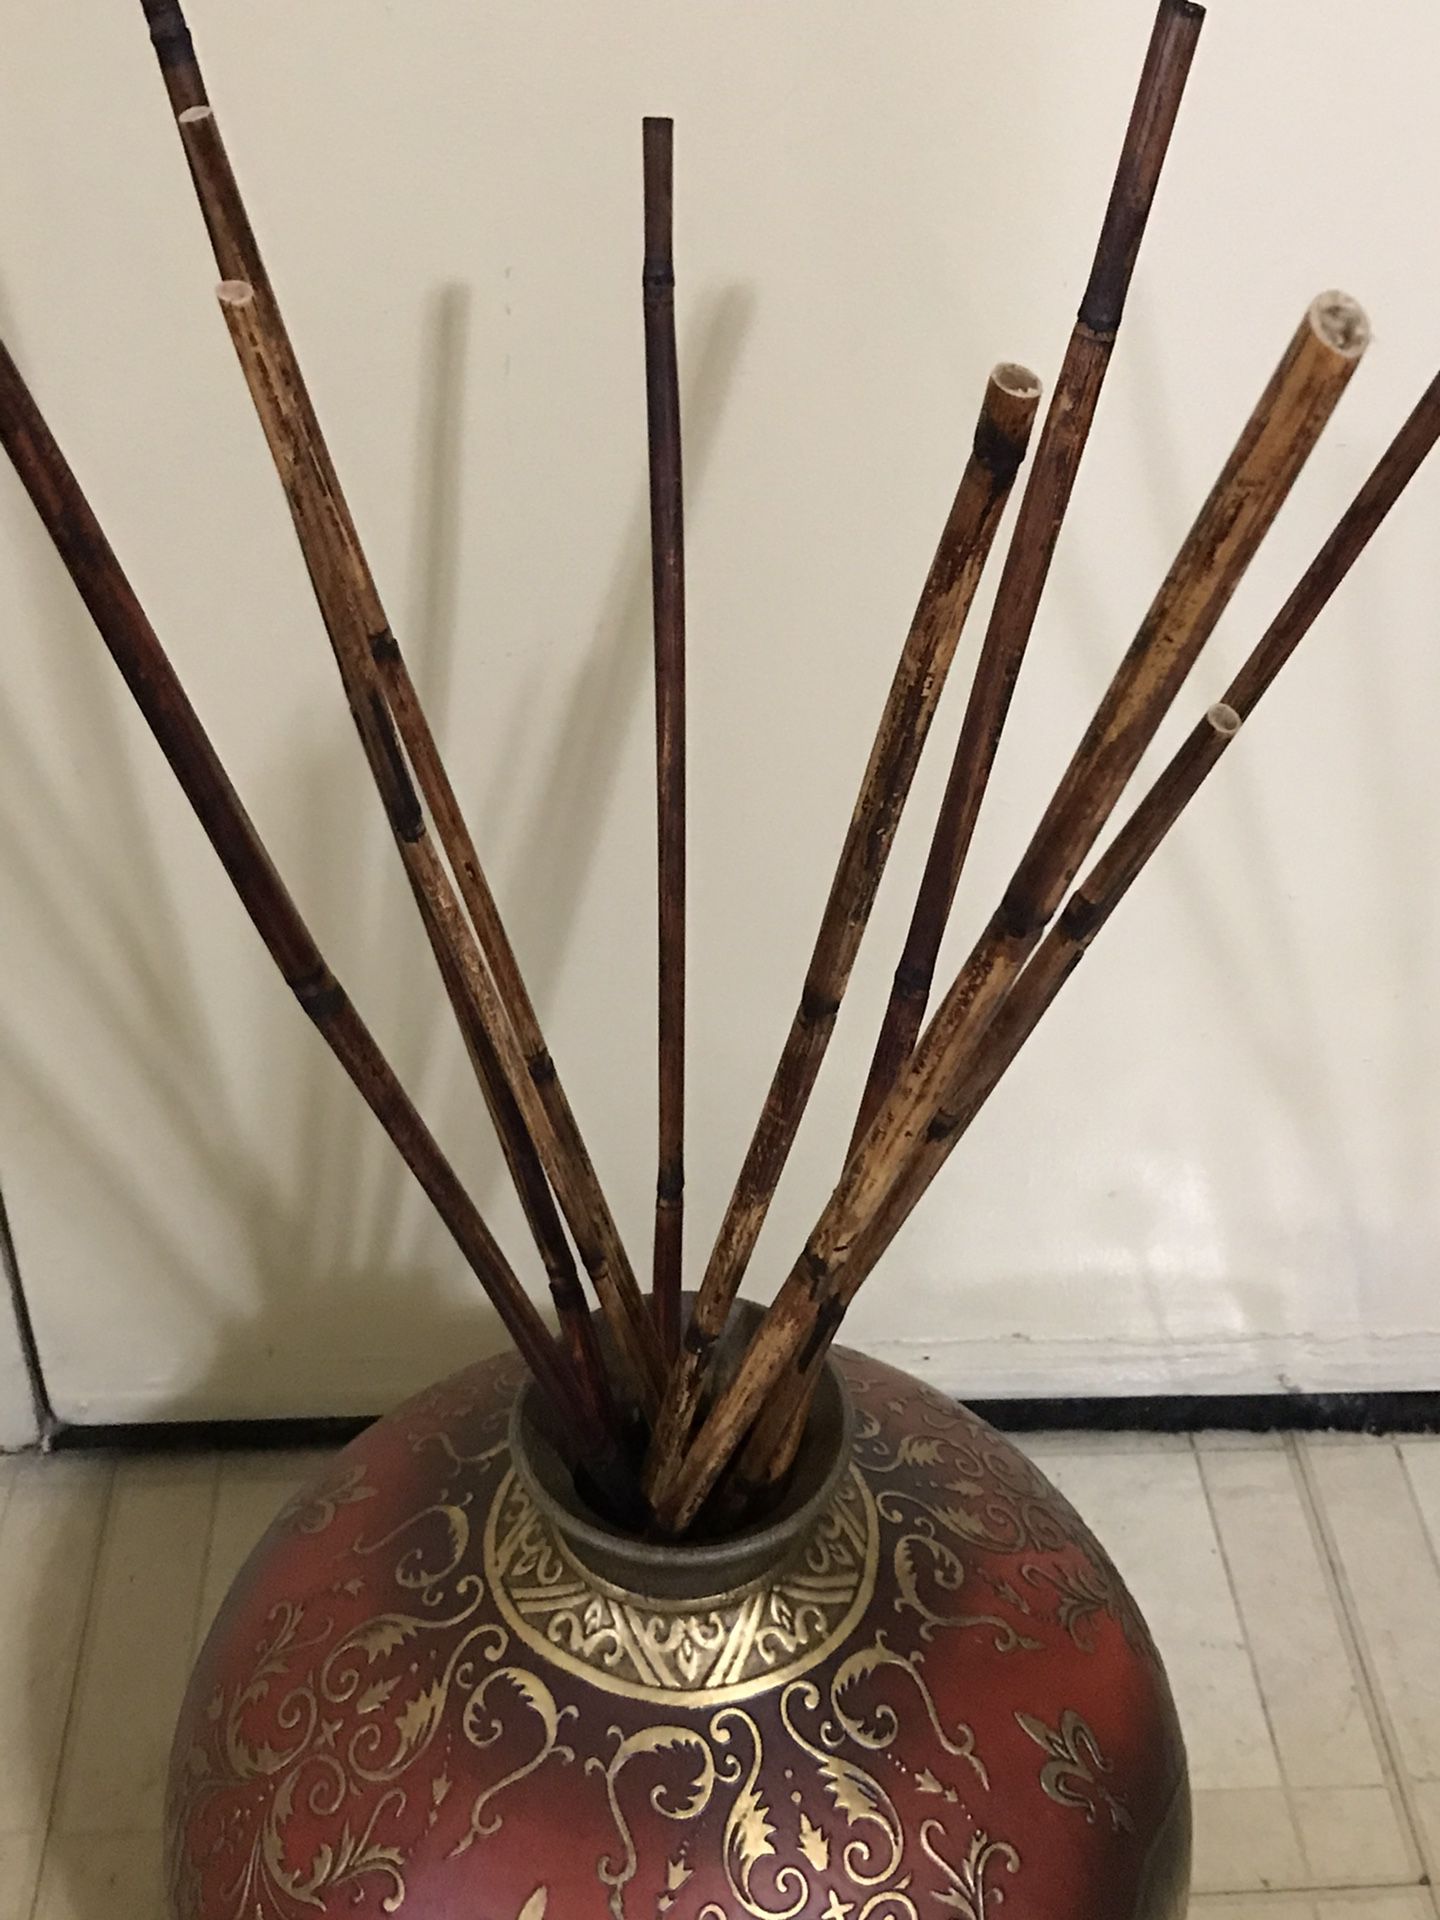 Still available one large heavy ceramic vase 18”x48” free bamboo sticks pick up Gaithersburg md20877